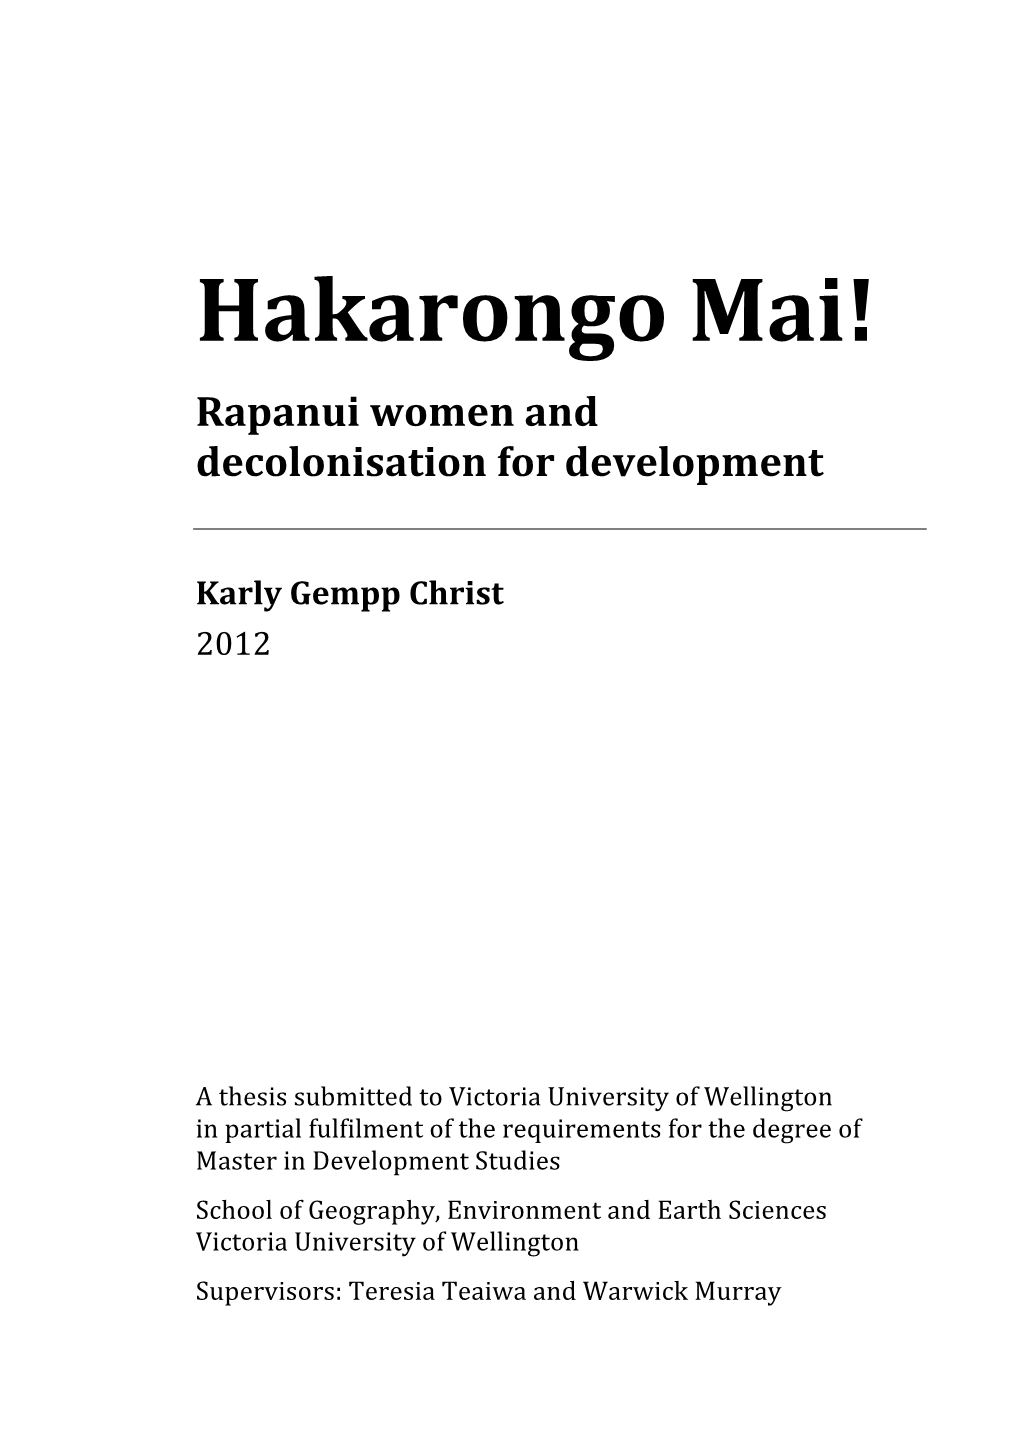 Hakarongo Mai! Rapanui Women and Decolonisation for Development